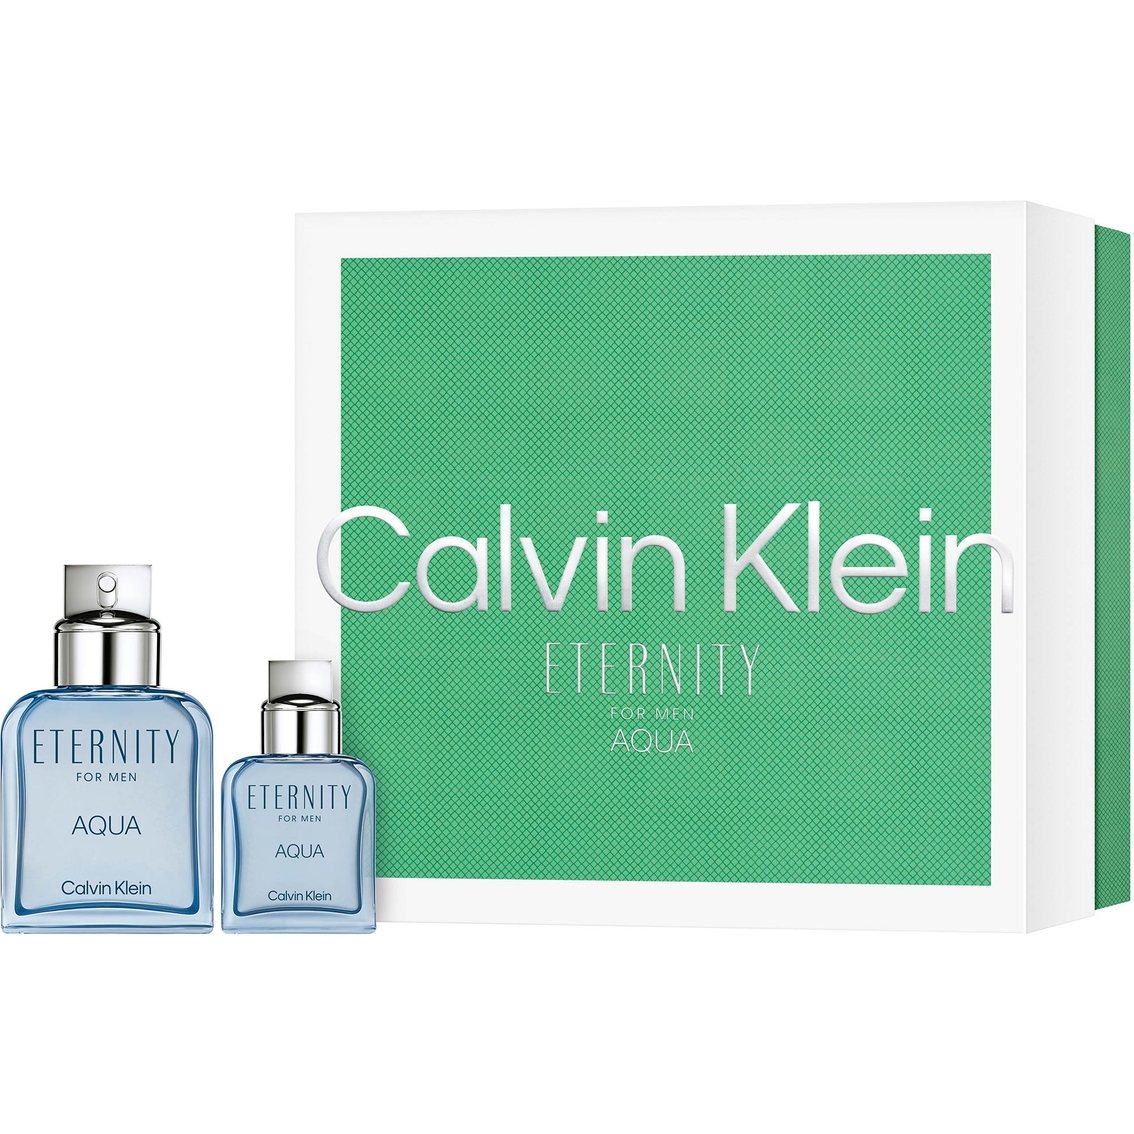 Calvin Klein Eternity For Men Aqua 2 Pc. Gift Set | Gifts Sets For Him ...